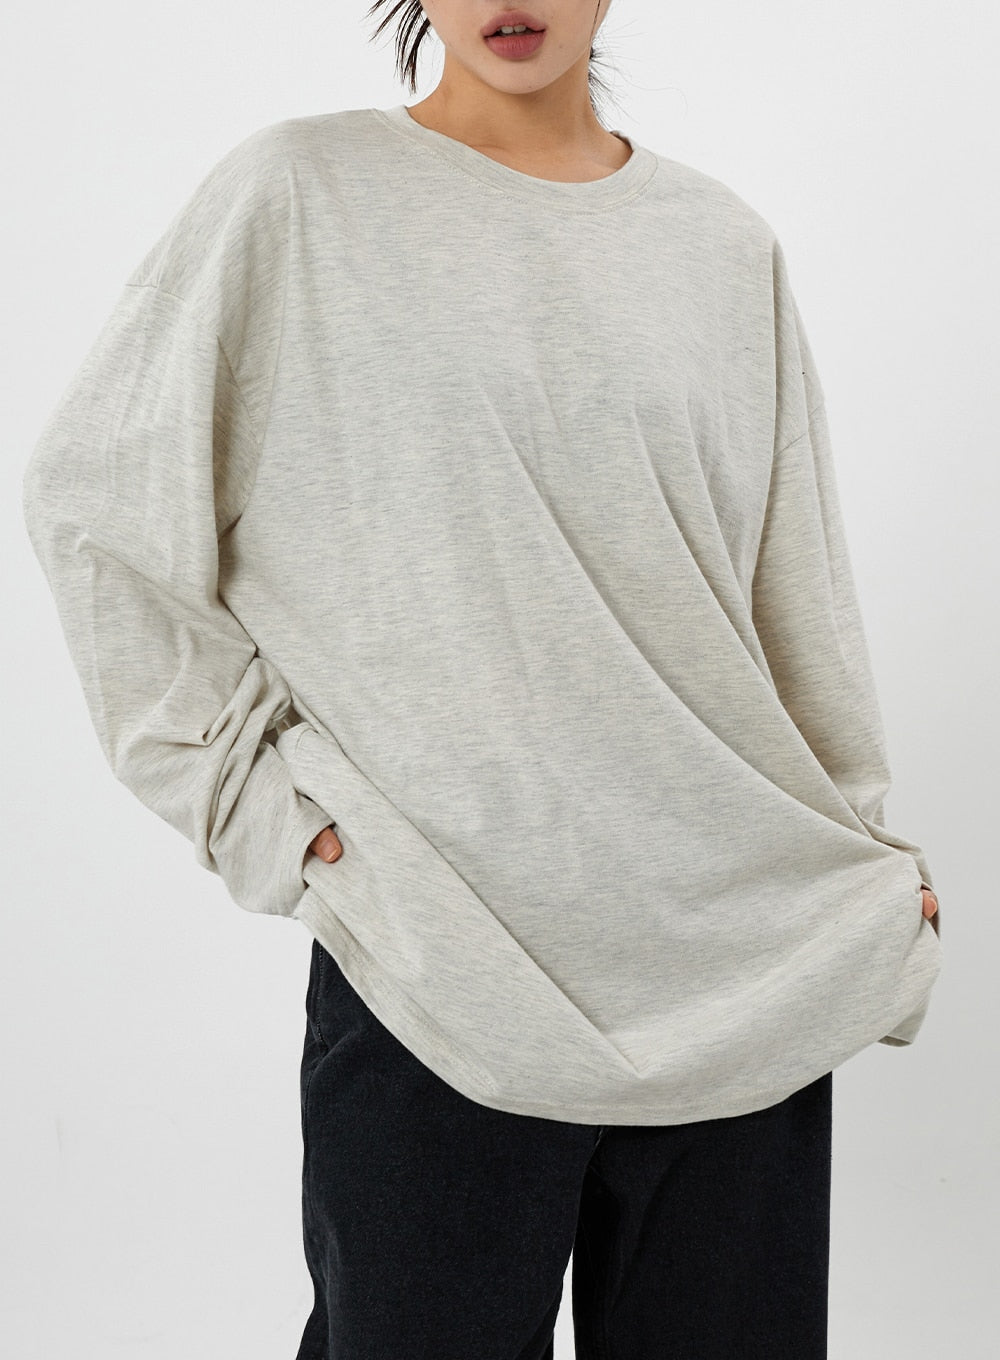 Loose Fit Long Sleeve T-Shirt Top Unisex CS21